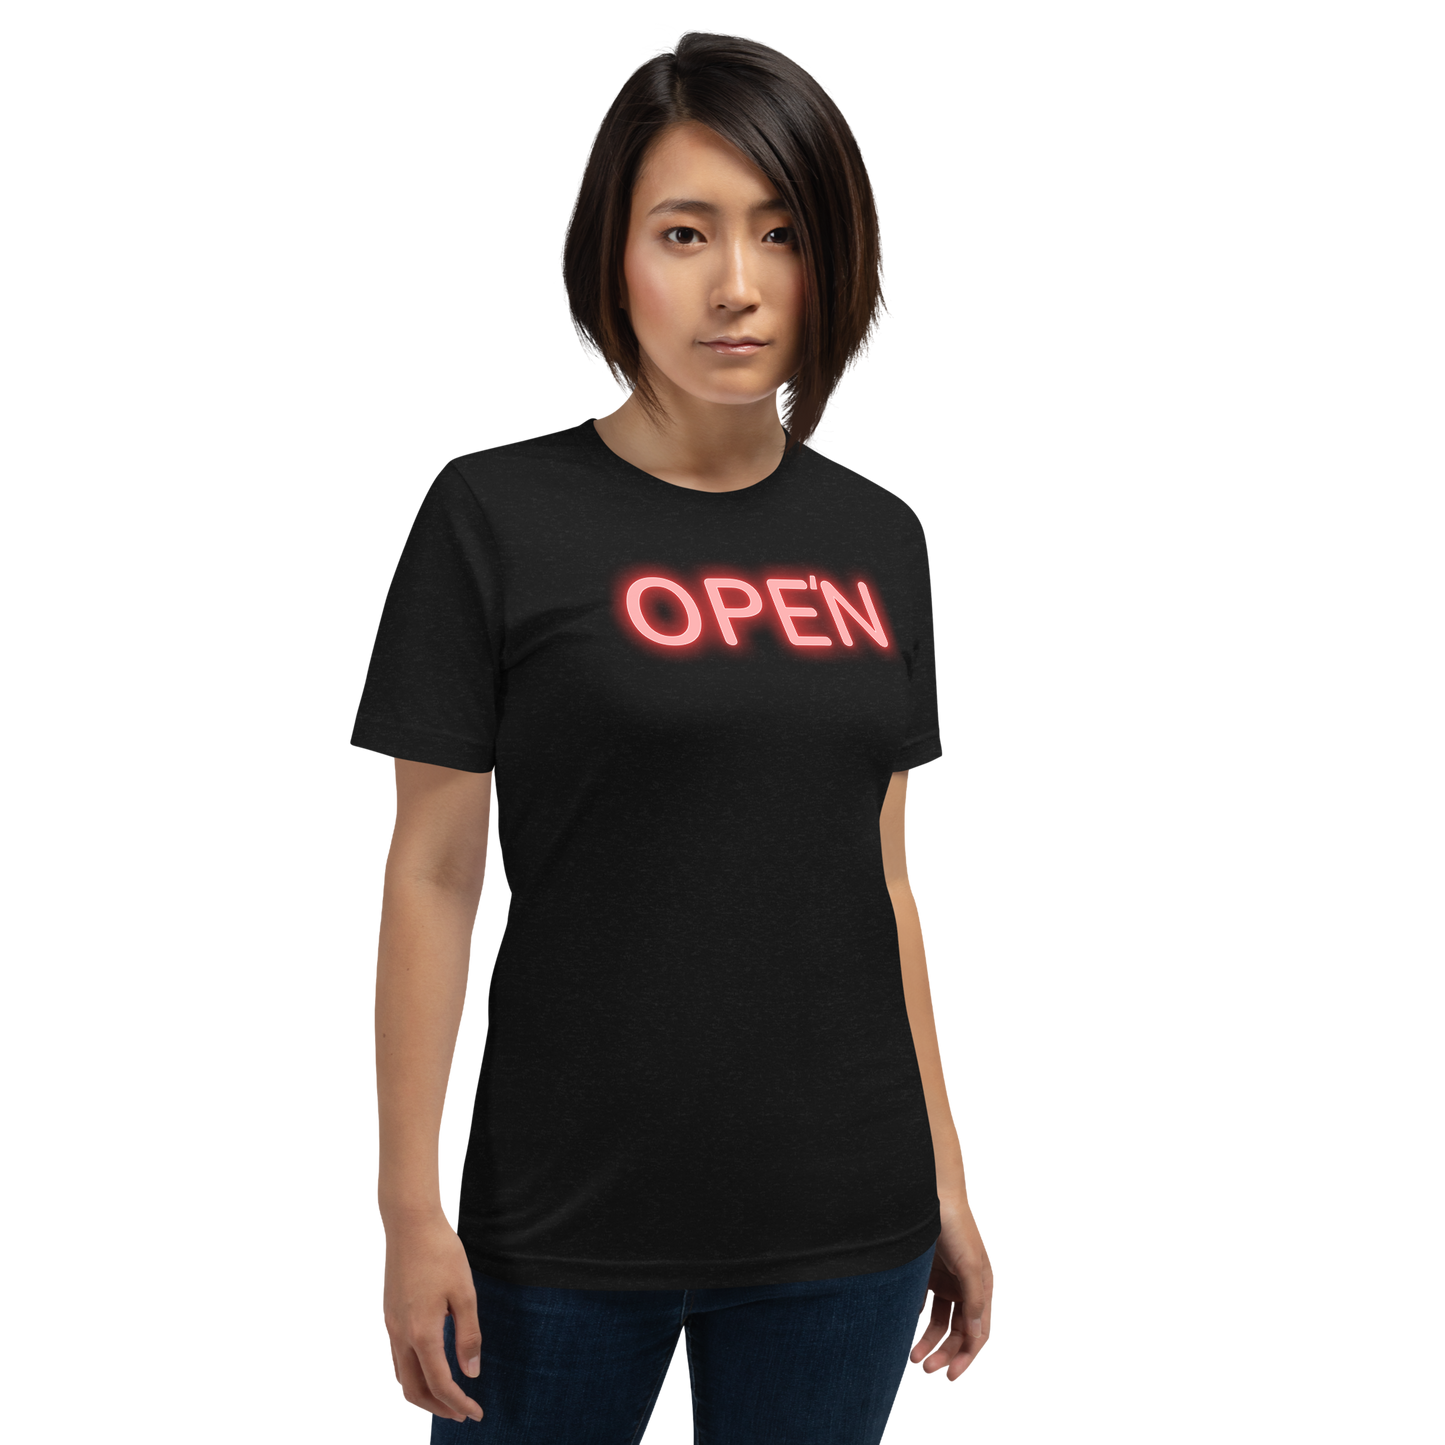 Ope'N Neon Unisex T-Shirt